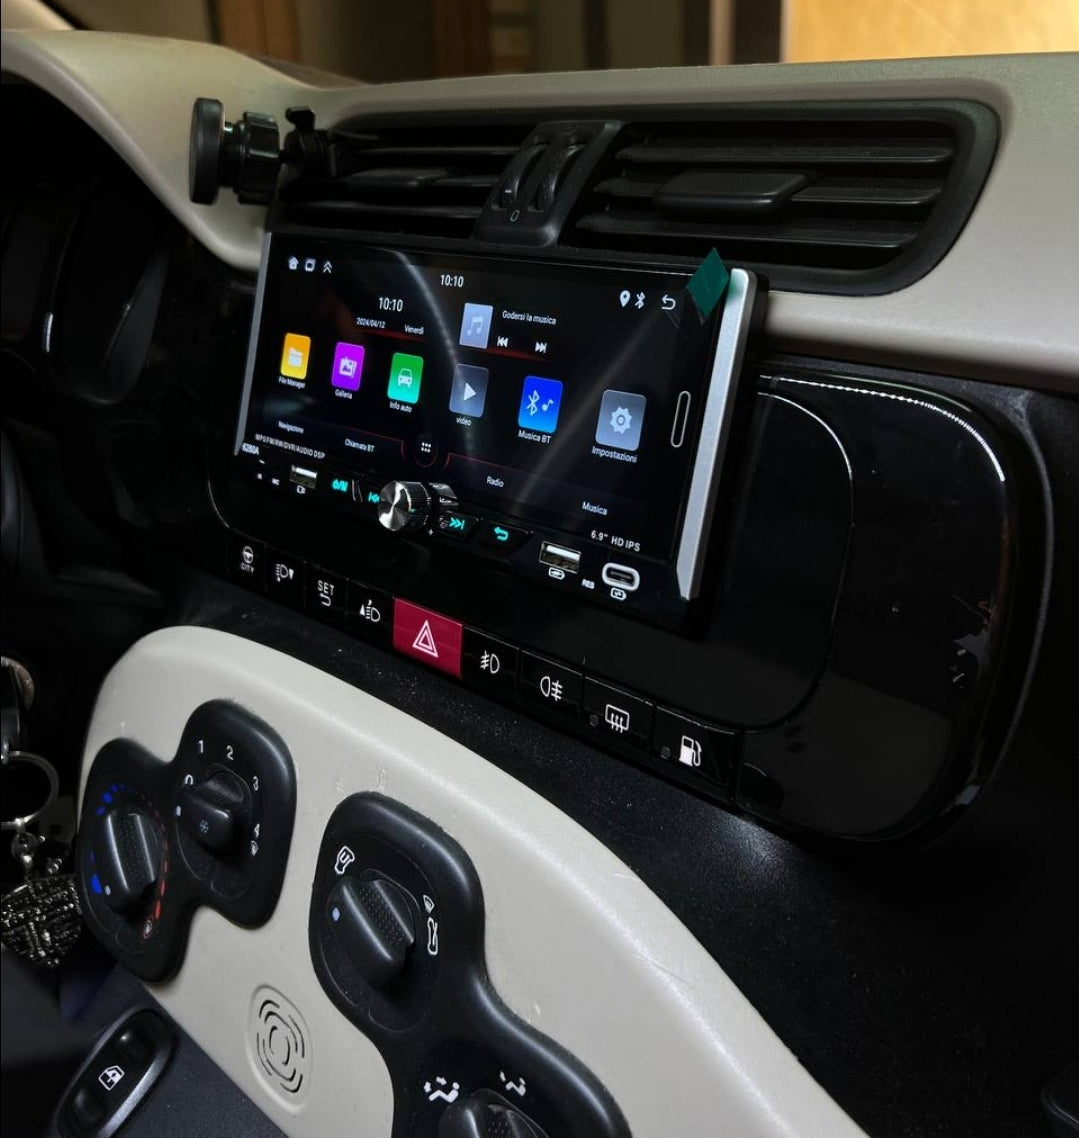 Autoradio Universale [FISSO]- 1Din 6.9"Pollici, Android, CarPlay & Android Auto, Bluetooth, Radio, GPS, Wifi, Youtube, PlayStore